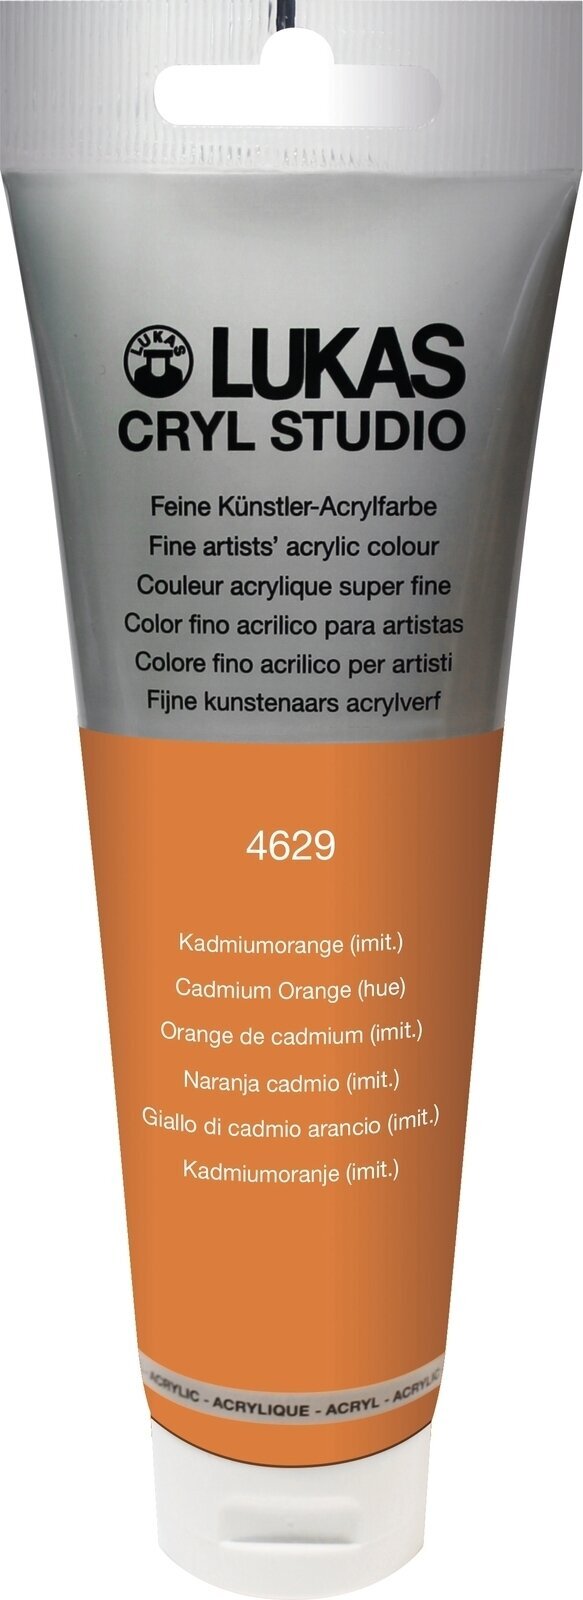 Akrylová farba Lukas Cryl Studio Acrylic Paint Plastic Tube Akrylová farba Cadmium Orange Hue 125 ml 1 ks